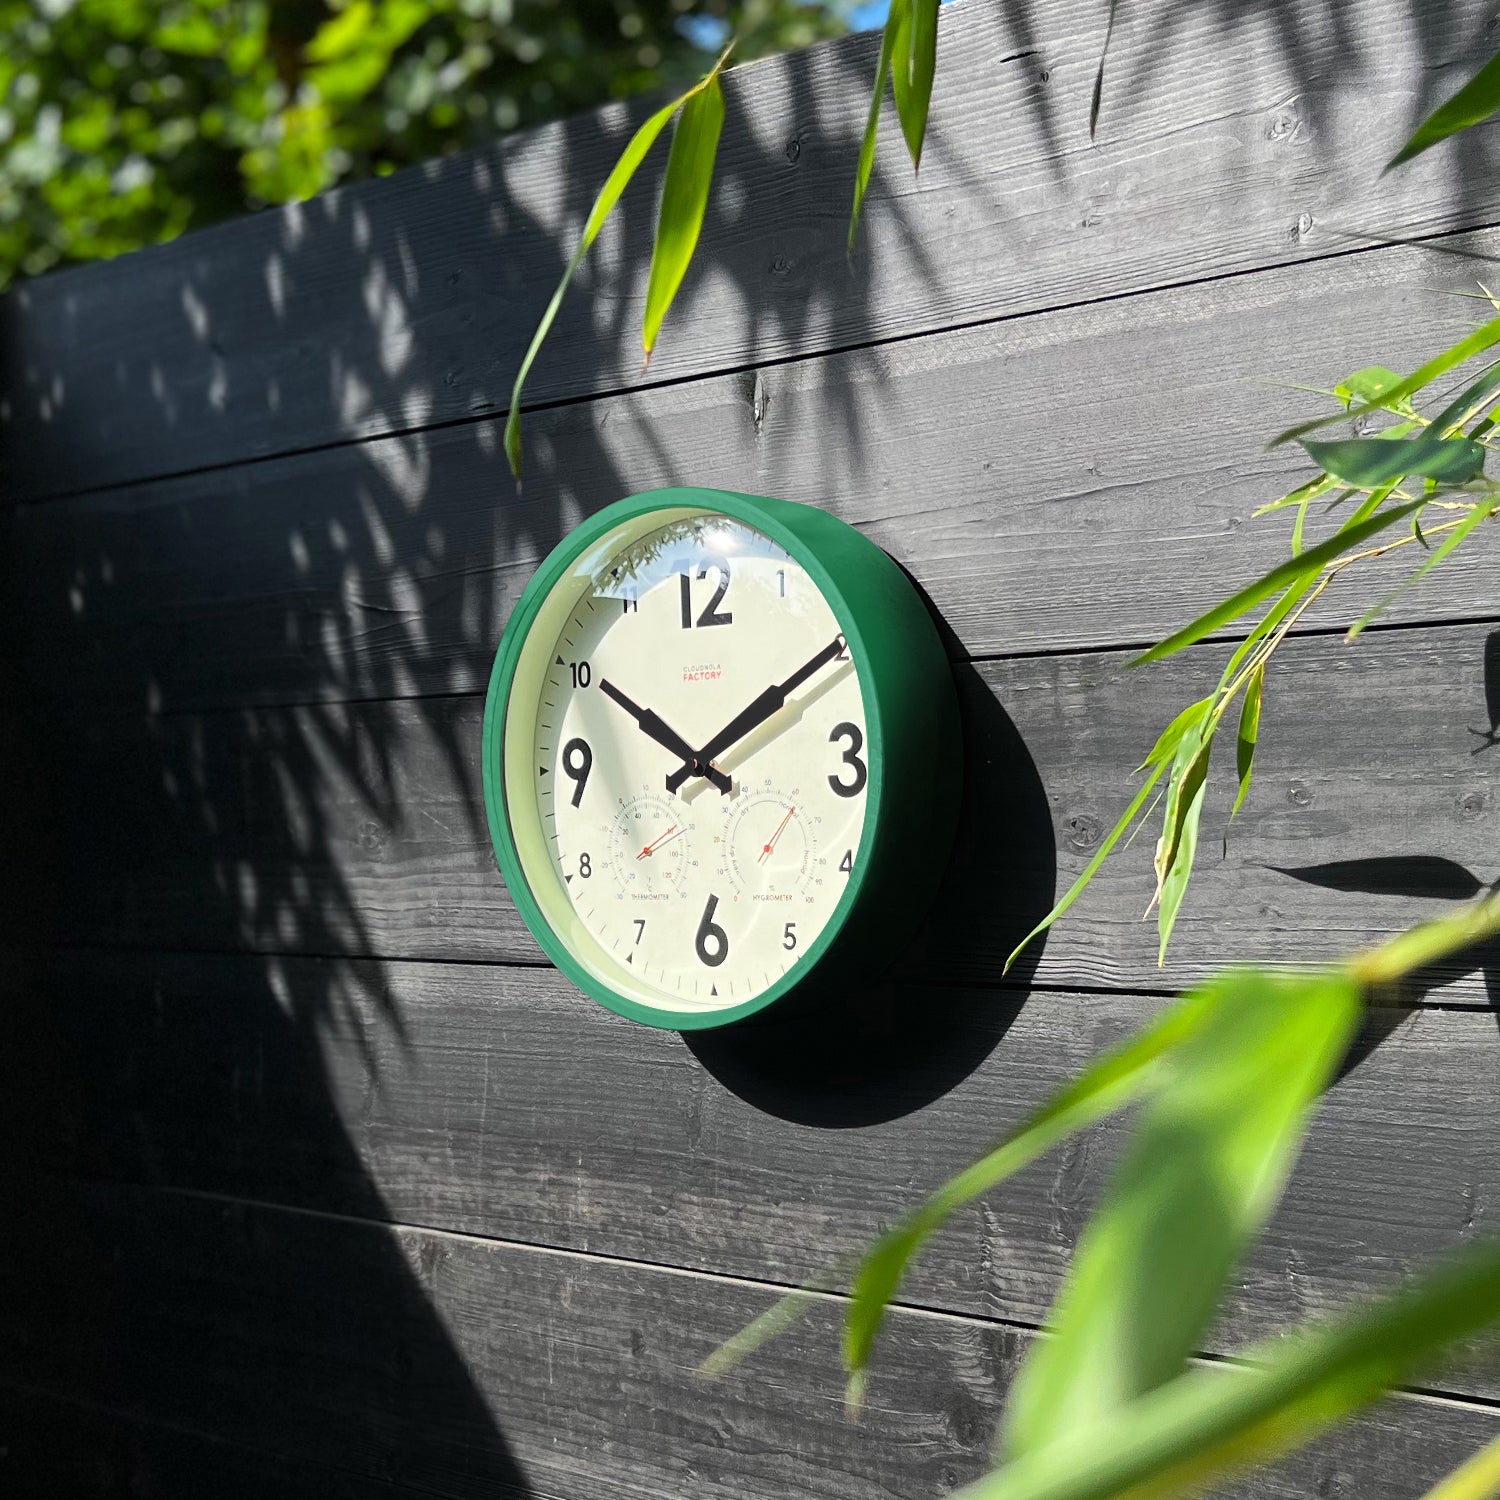 Cloudnola Green Factory Outdoor Wall Clock - Durable Weather 